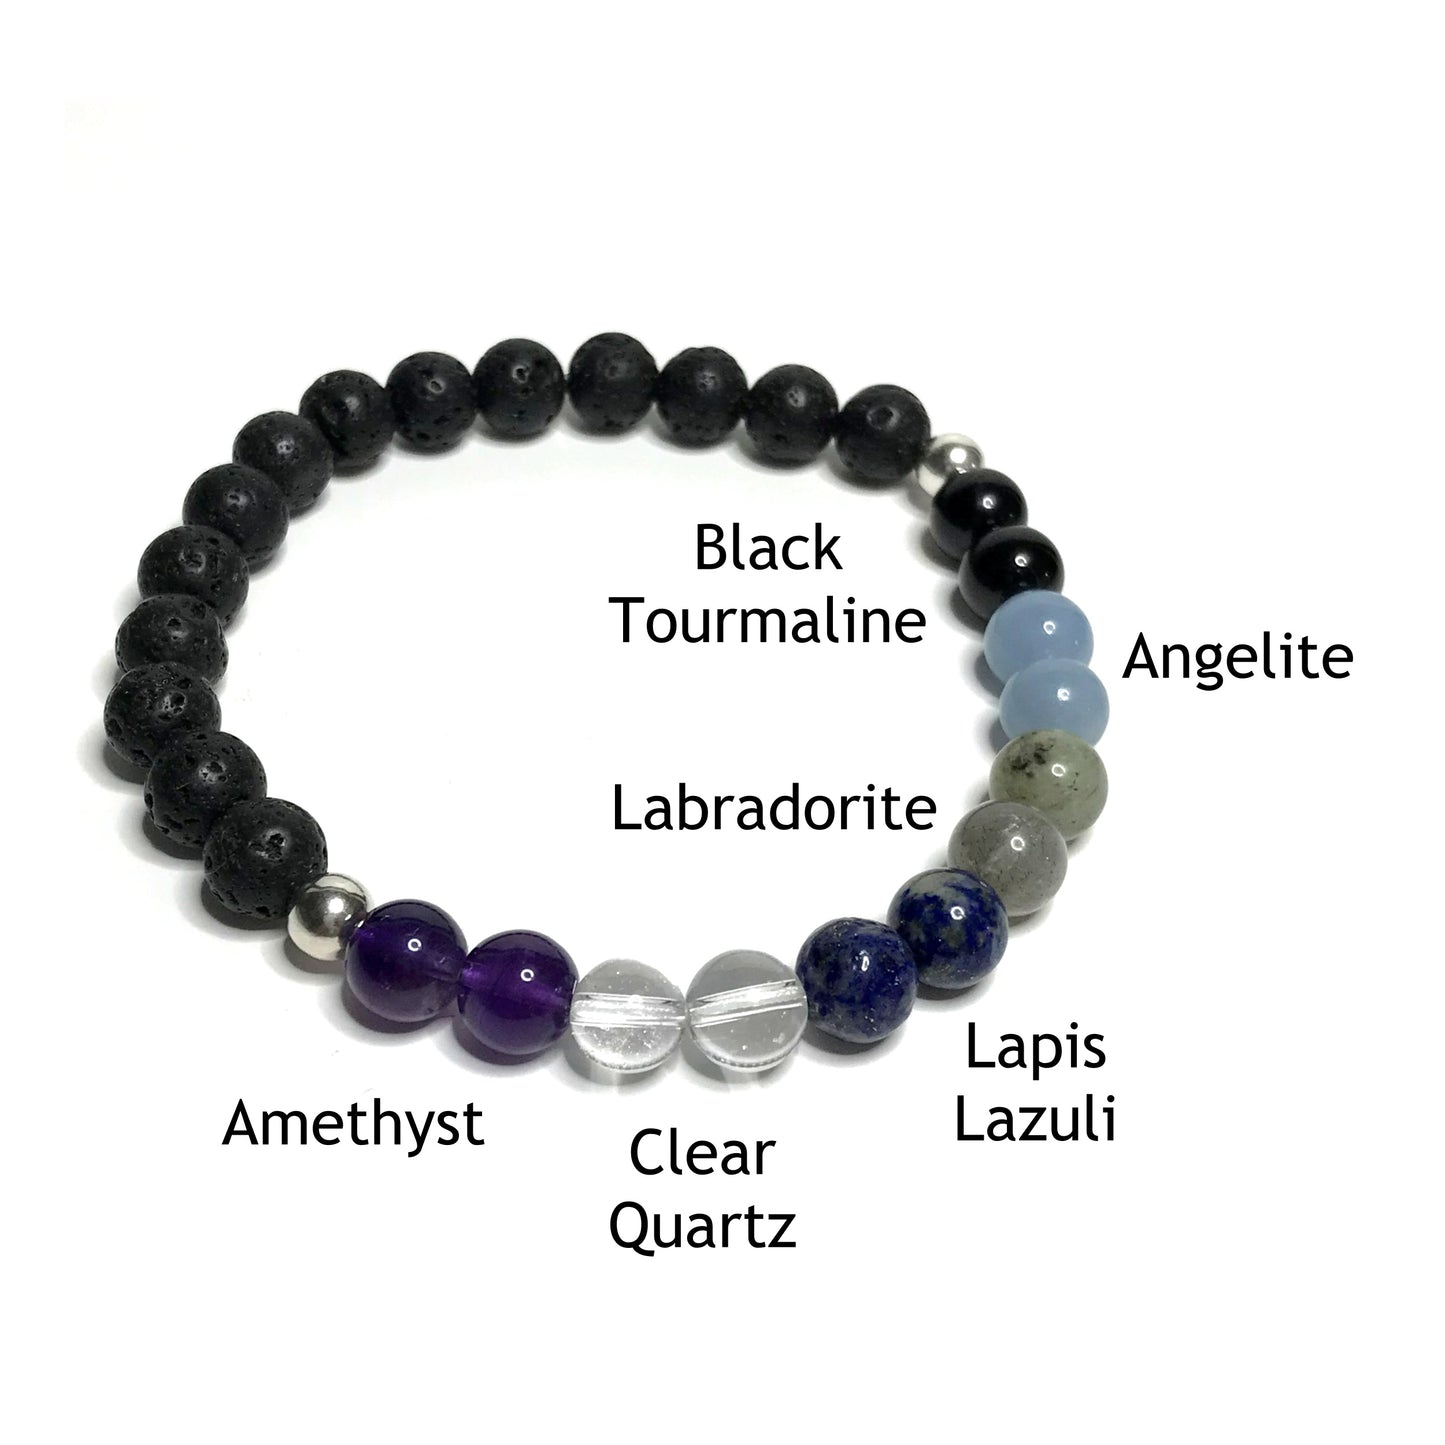 Meditation bracelet with lava rock with the beads labelled as amethyst, clear quartz, lapis lazuli, labradorite, angelite and black tourmaline